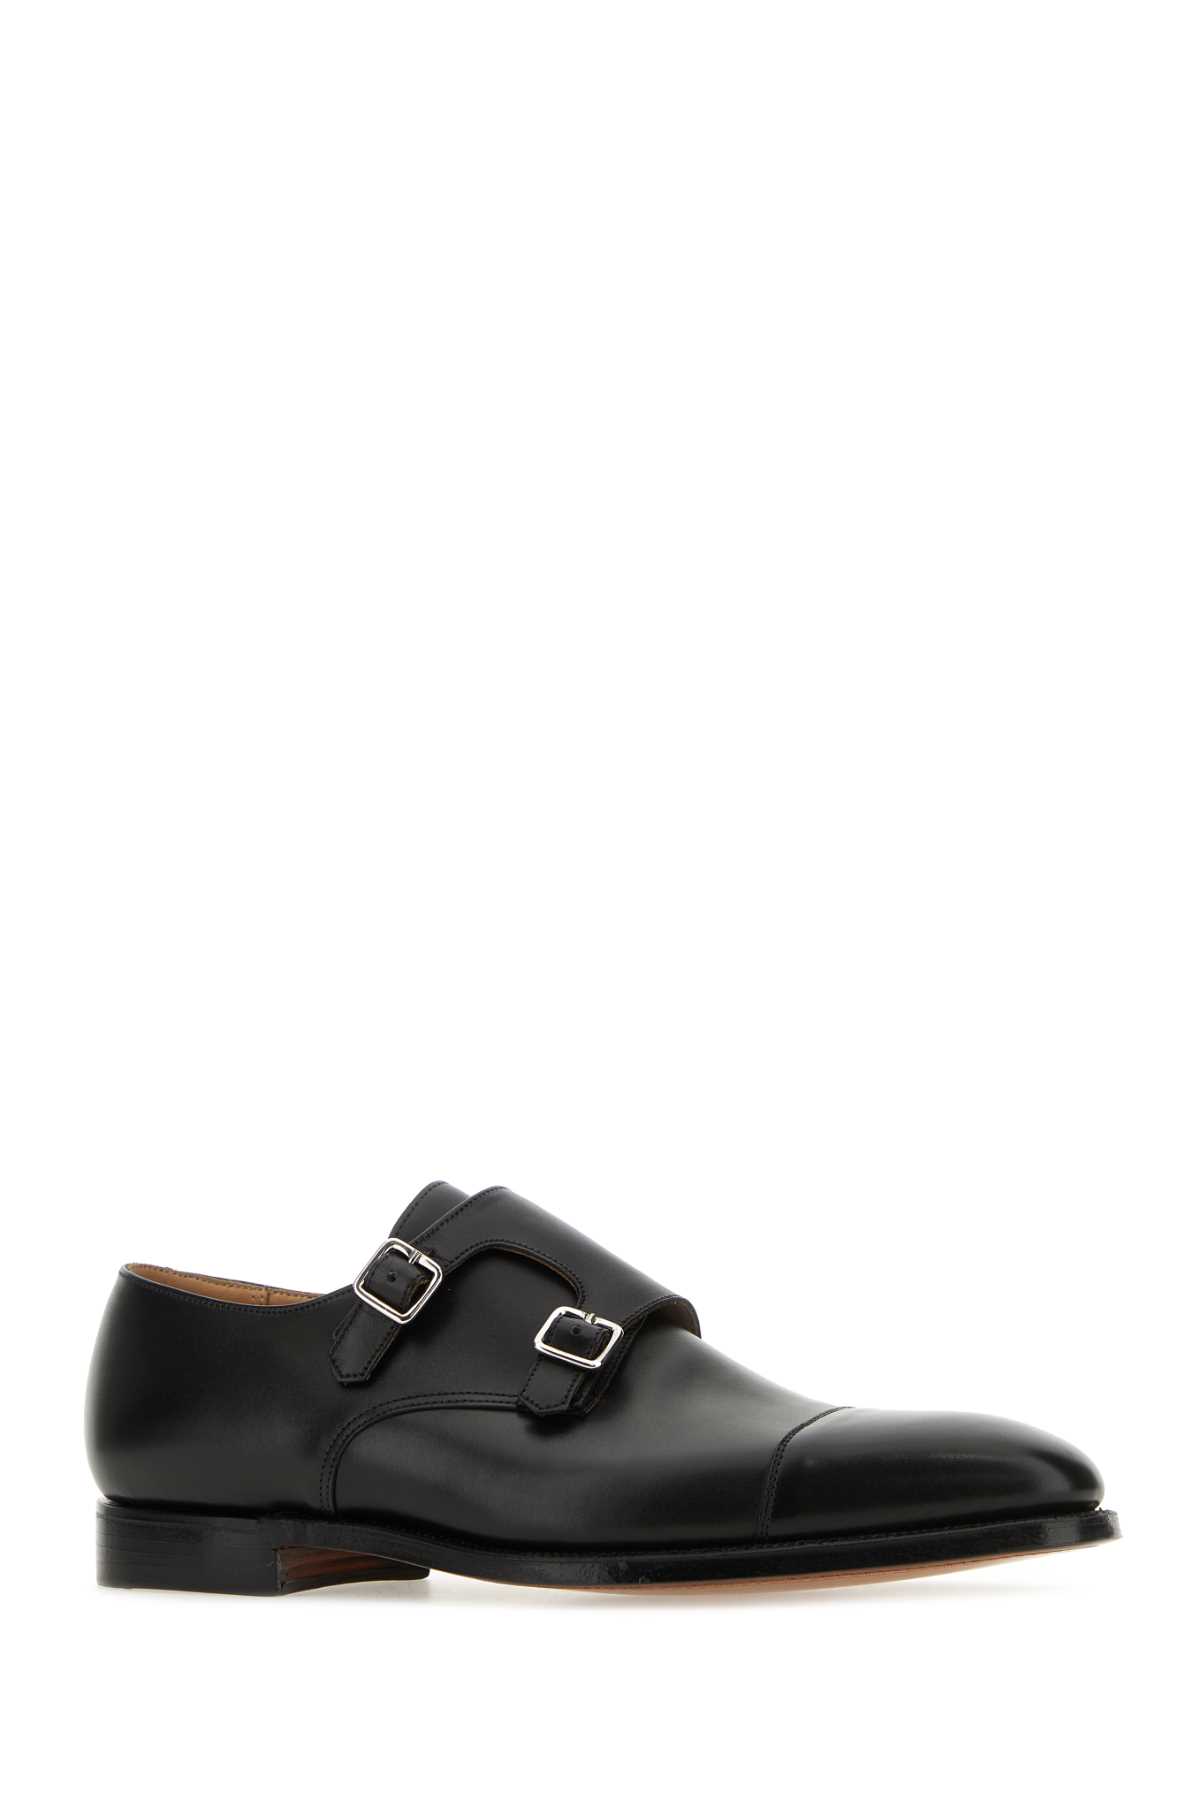 Shop Crockett &amp; Jones Black Leather Lowndes Monk Strap Shoes